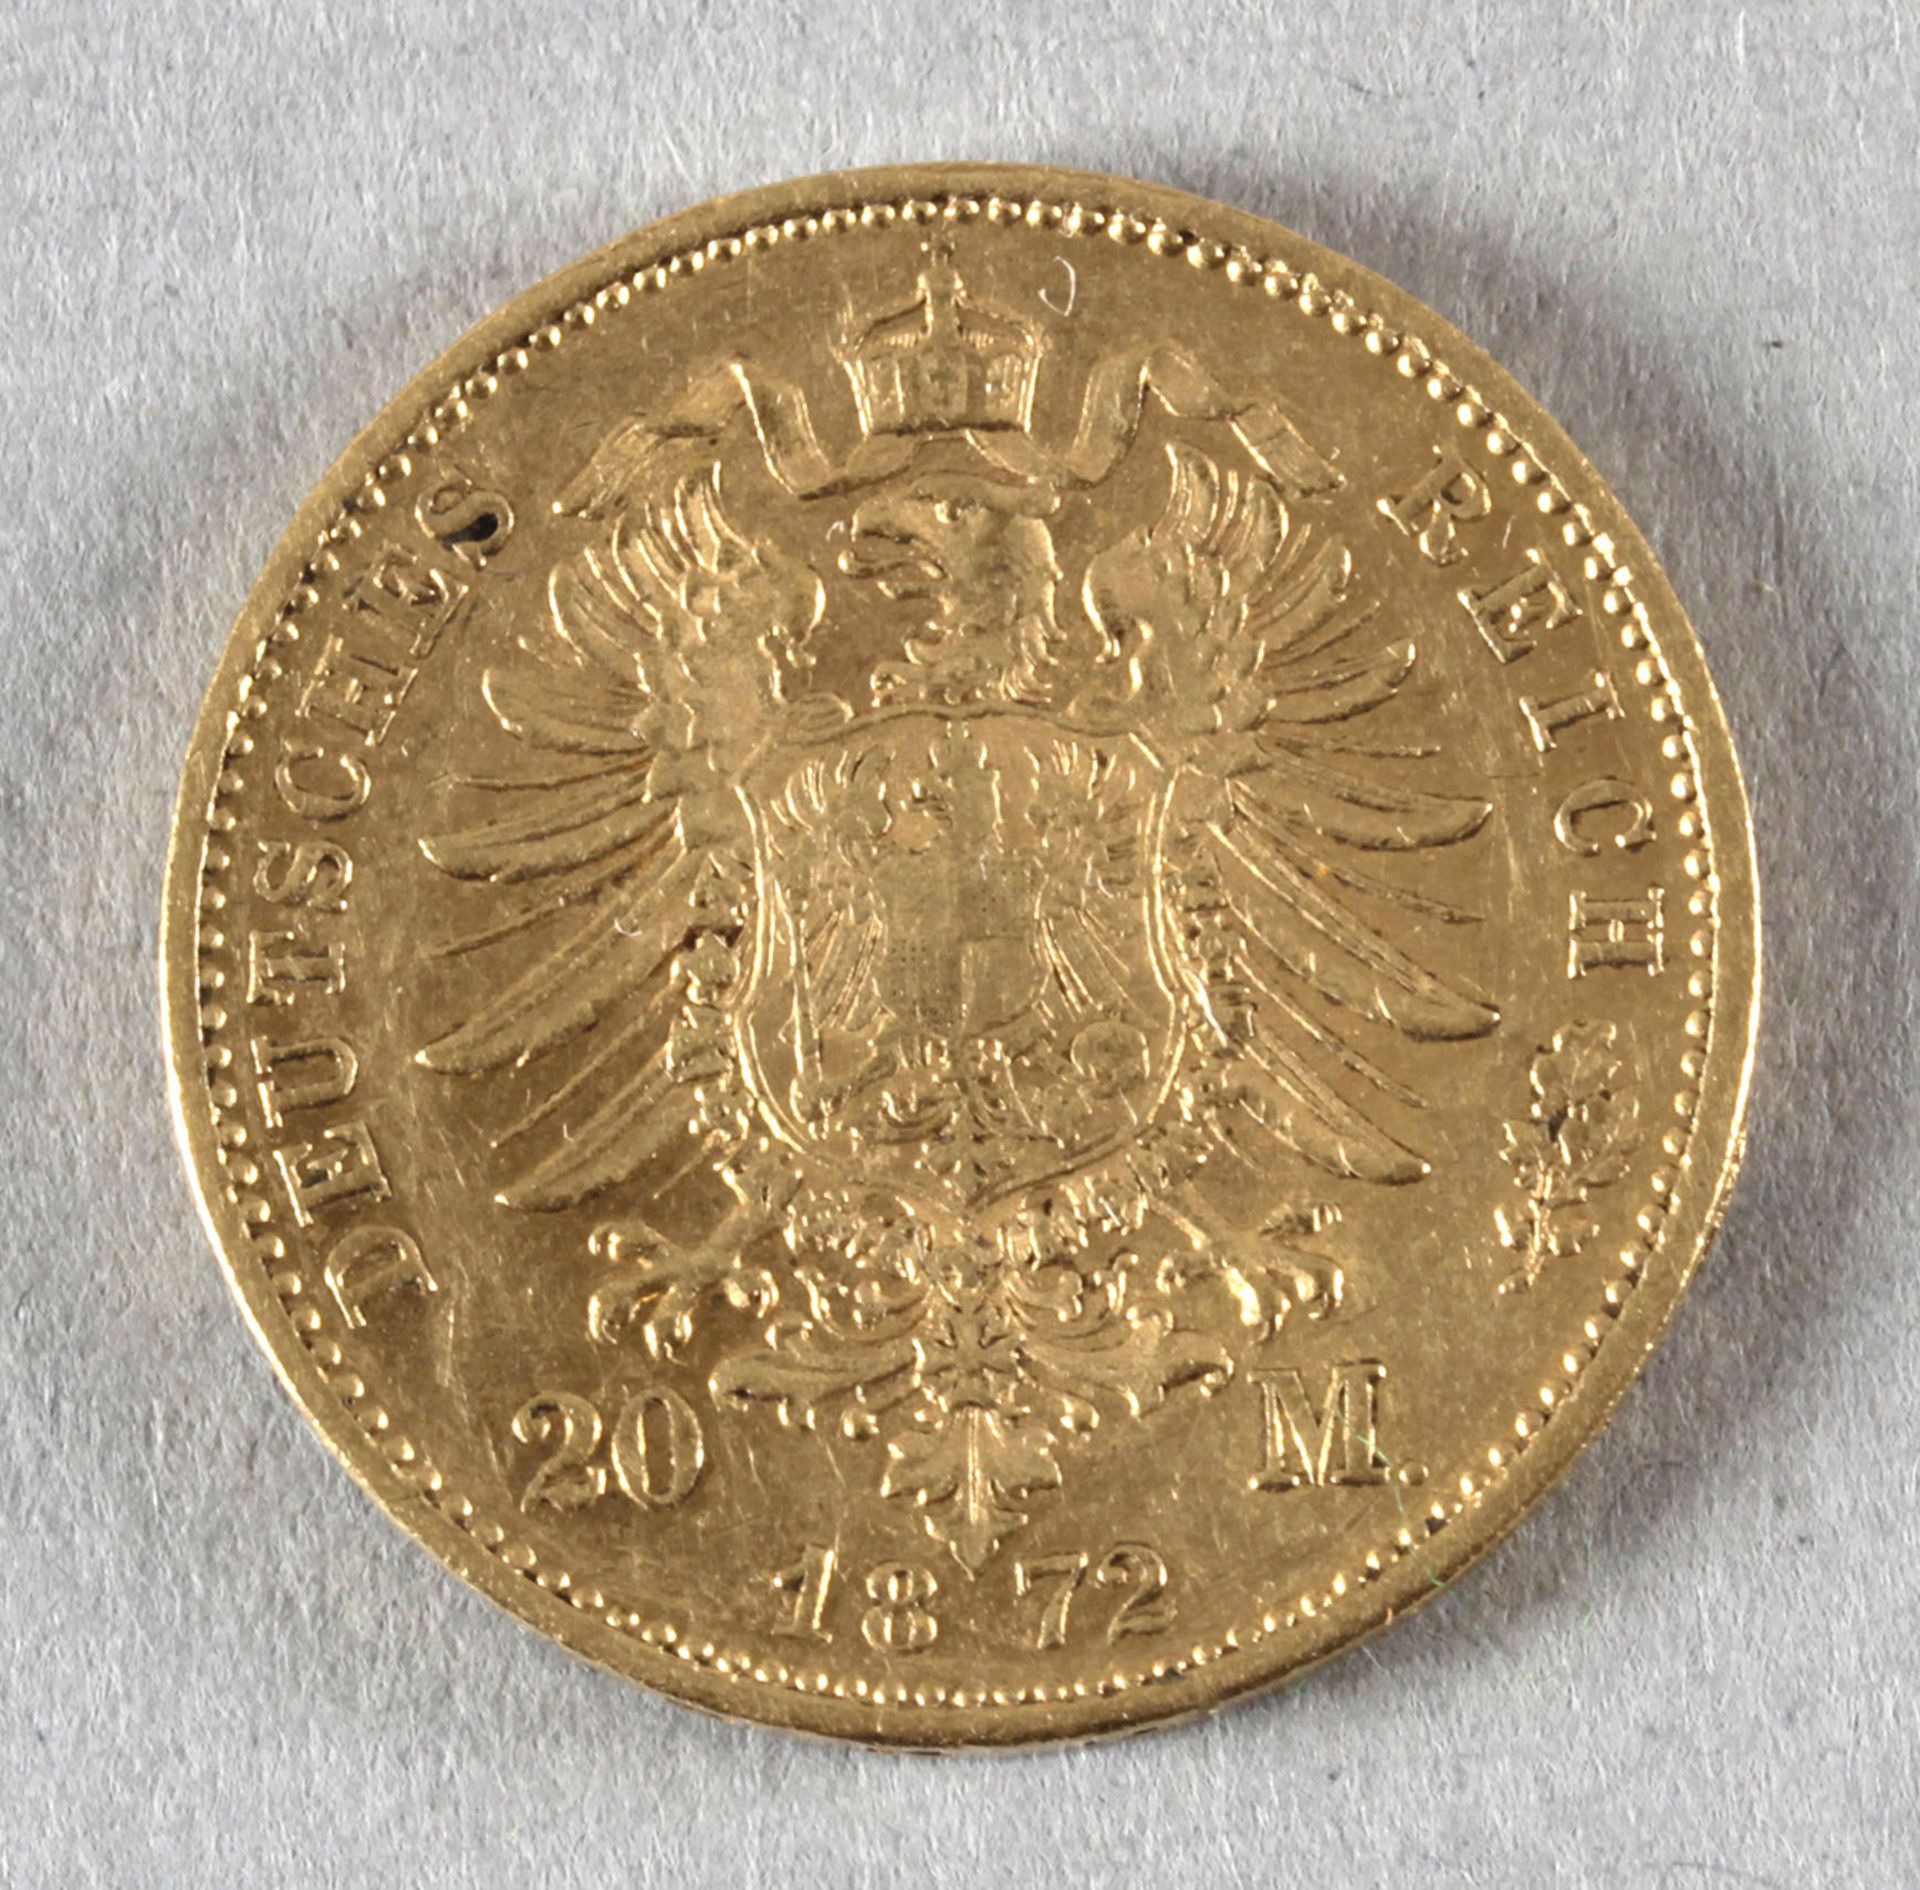 Goldmünze, 20 Mark, dt. Kaiserreich (Bayern), 1872 D, Ludwig II. - Image 2 of 2